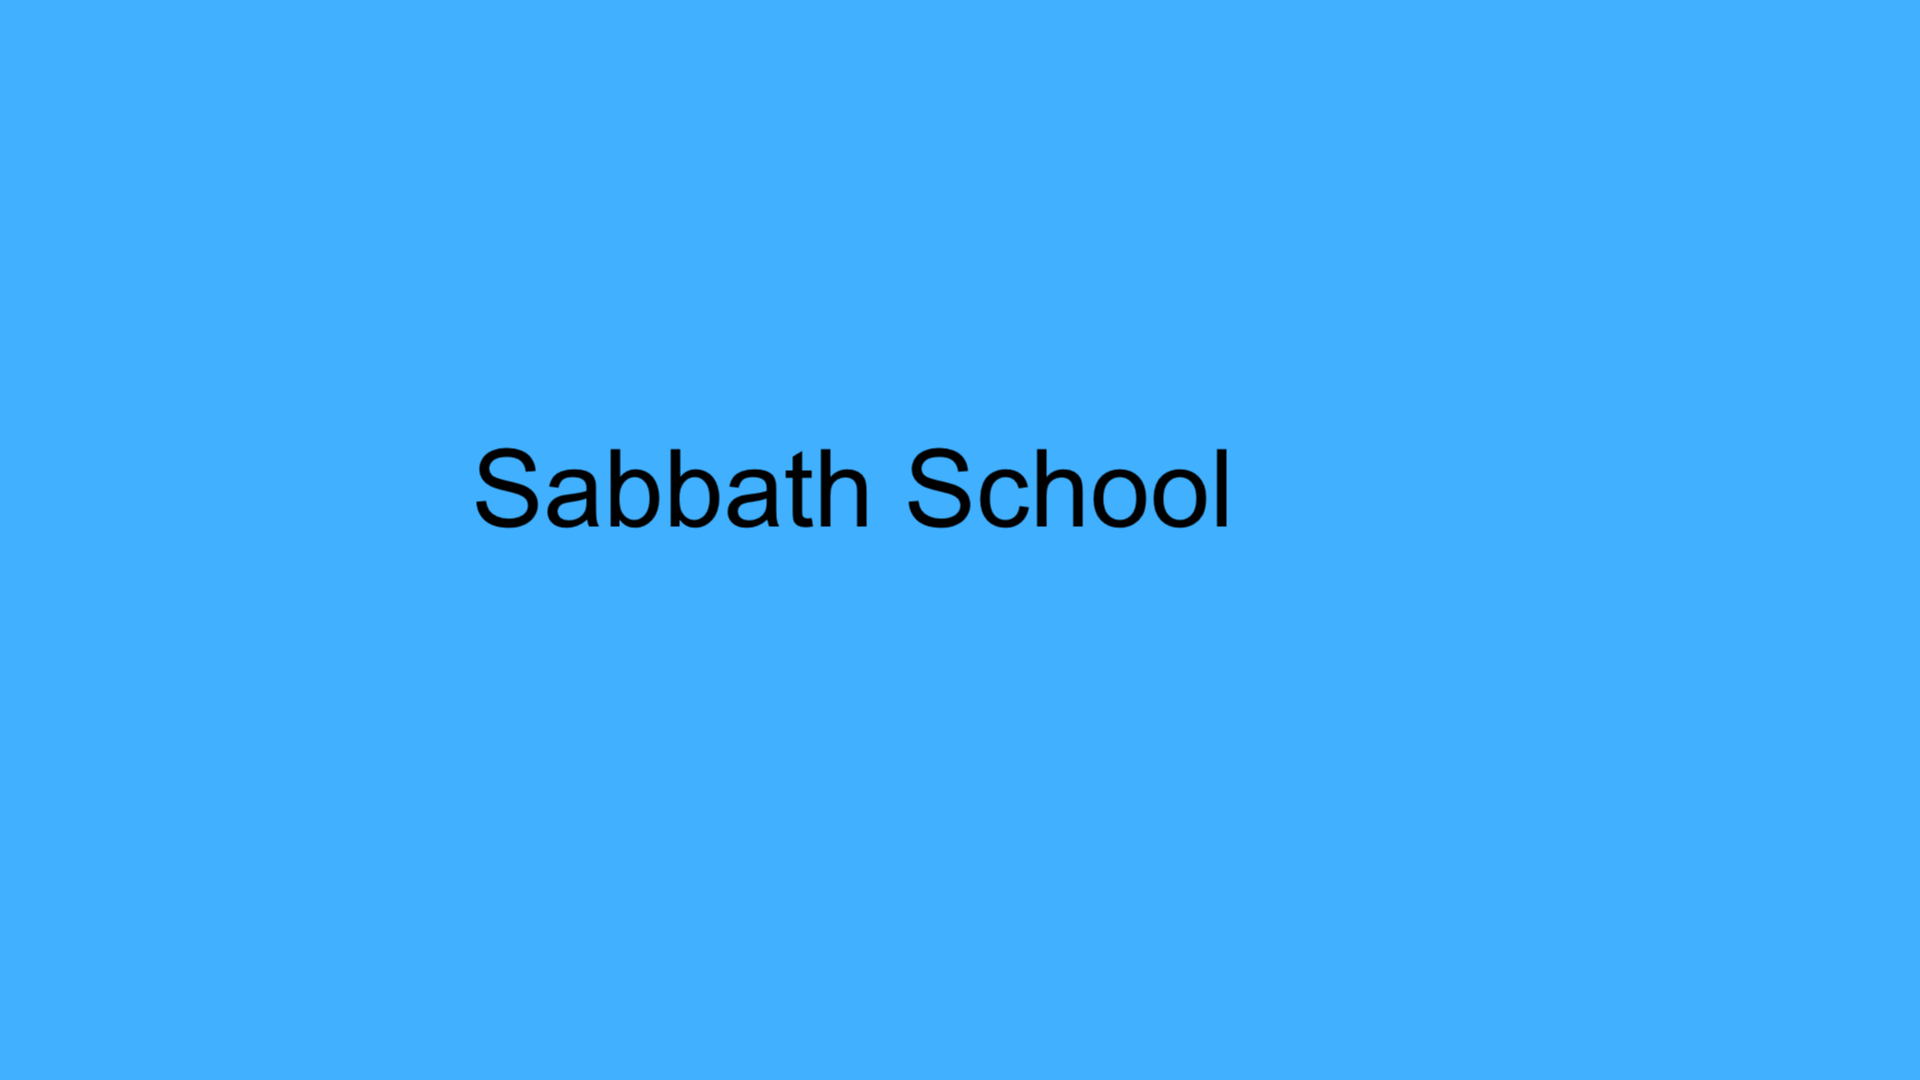 12/19/20Sabbath School